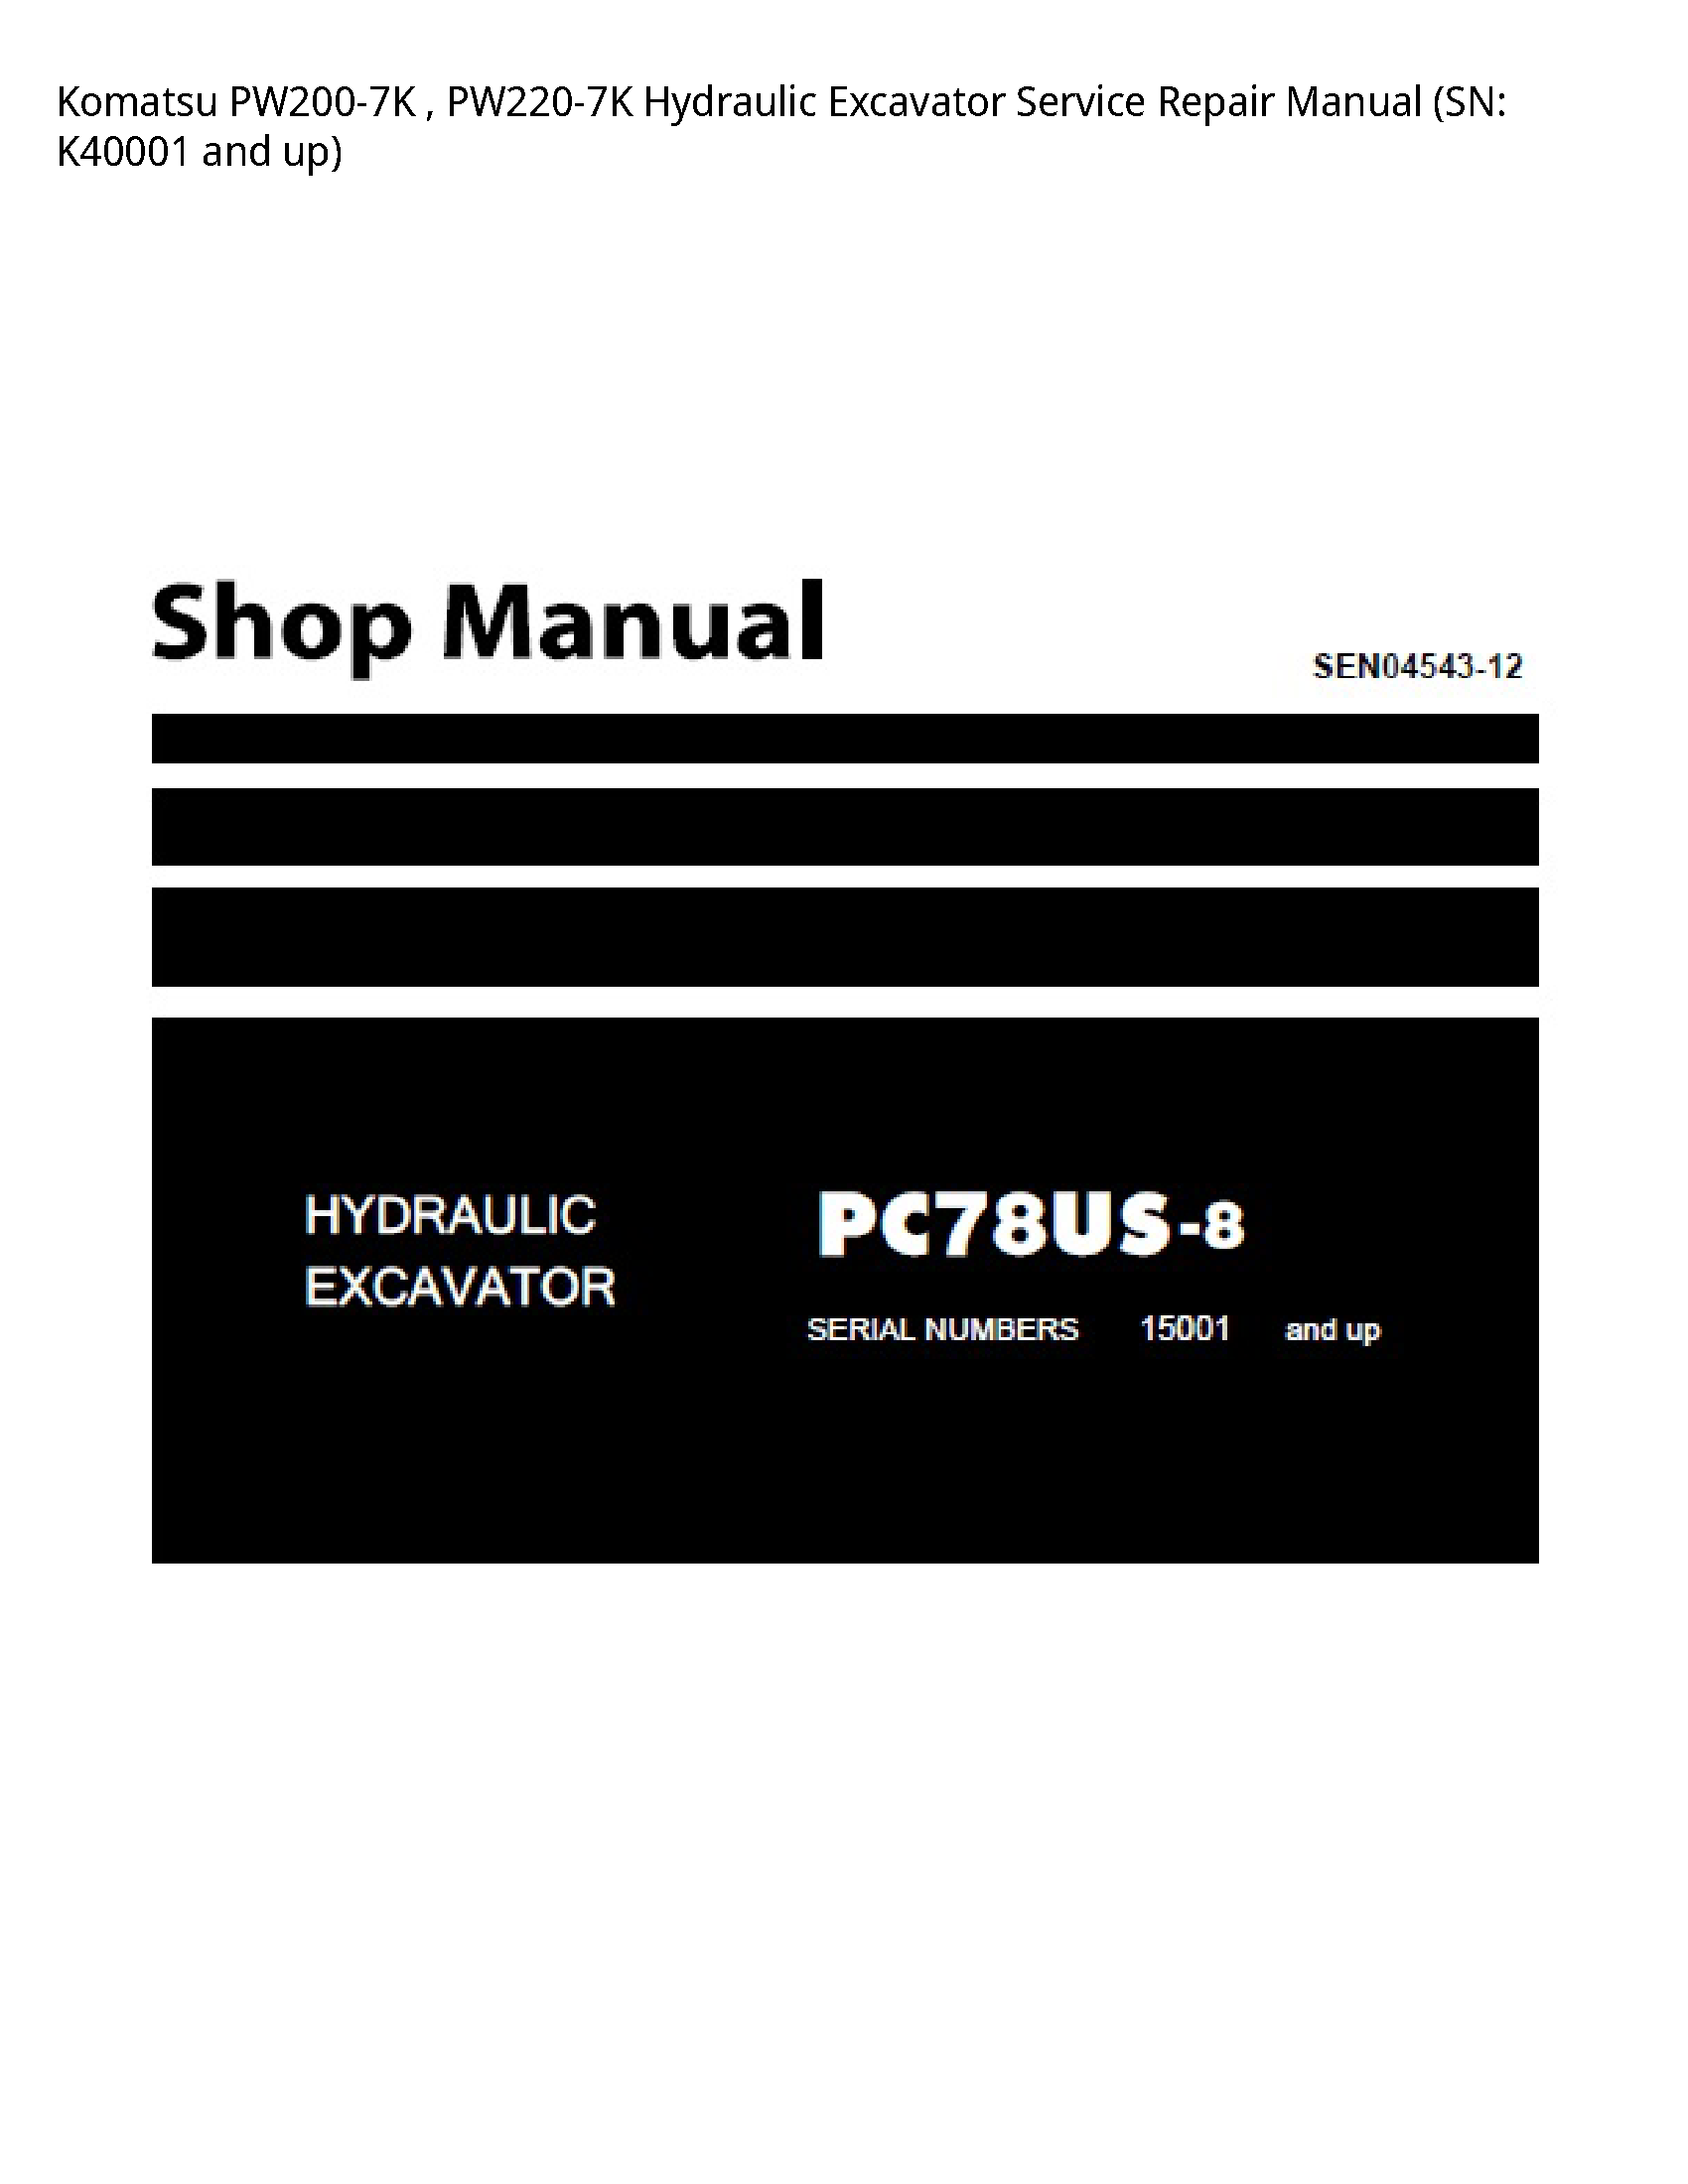 KOMATSU PW200-7K Hydraulic Excavator manual